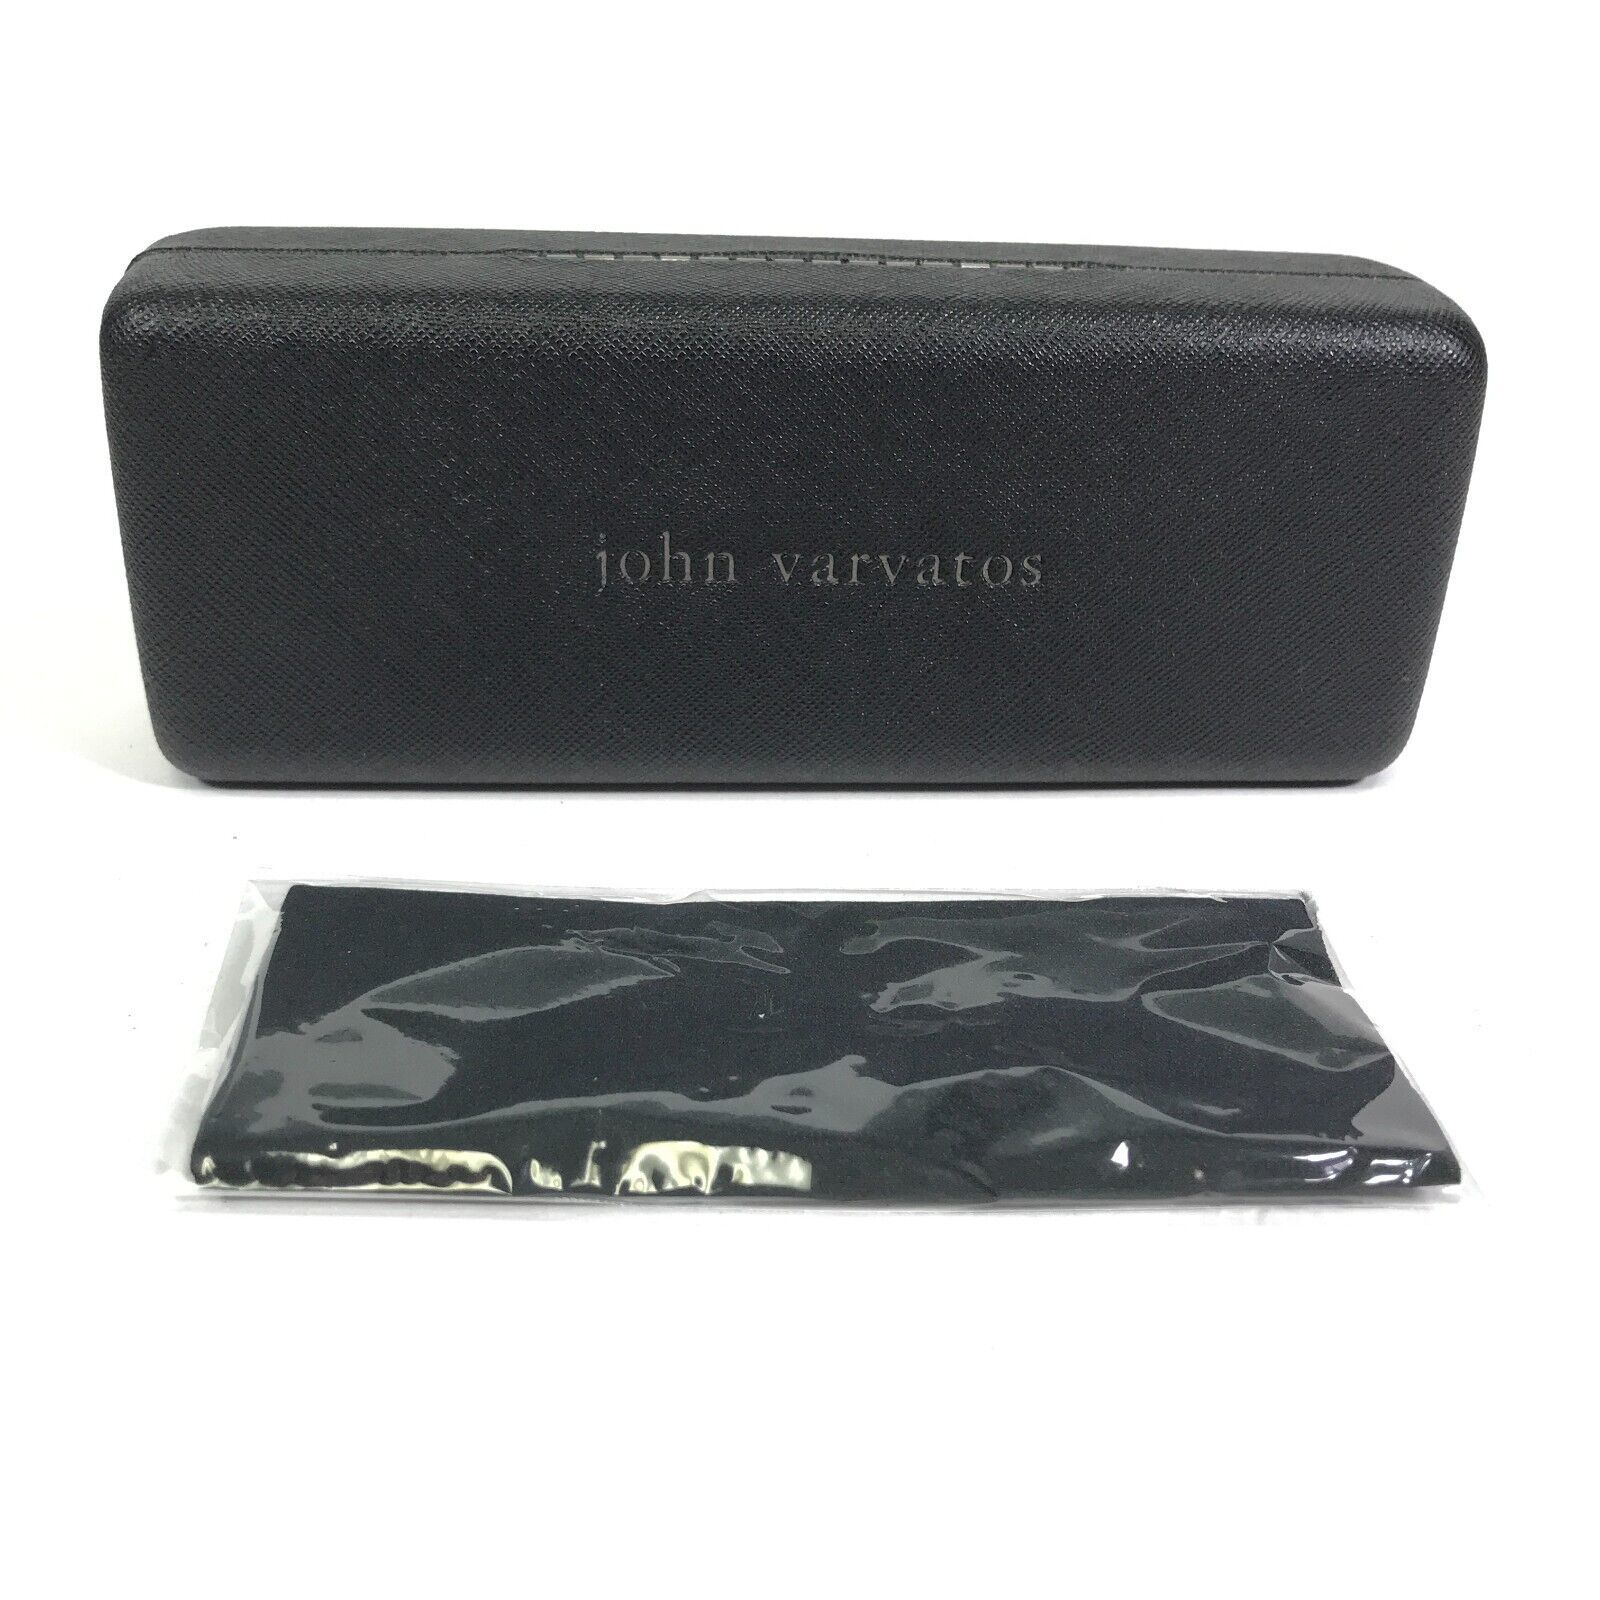 John Varvatos Eyeglasses Case and Cloth Black Clamshell Hard Rectangular - $13.99